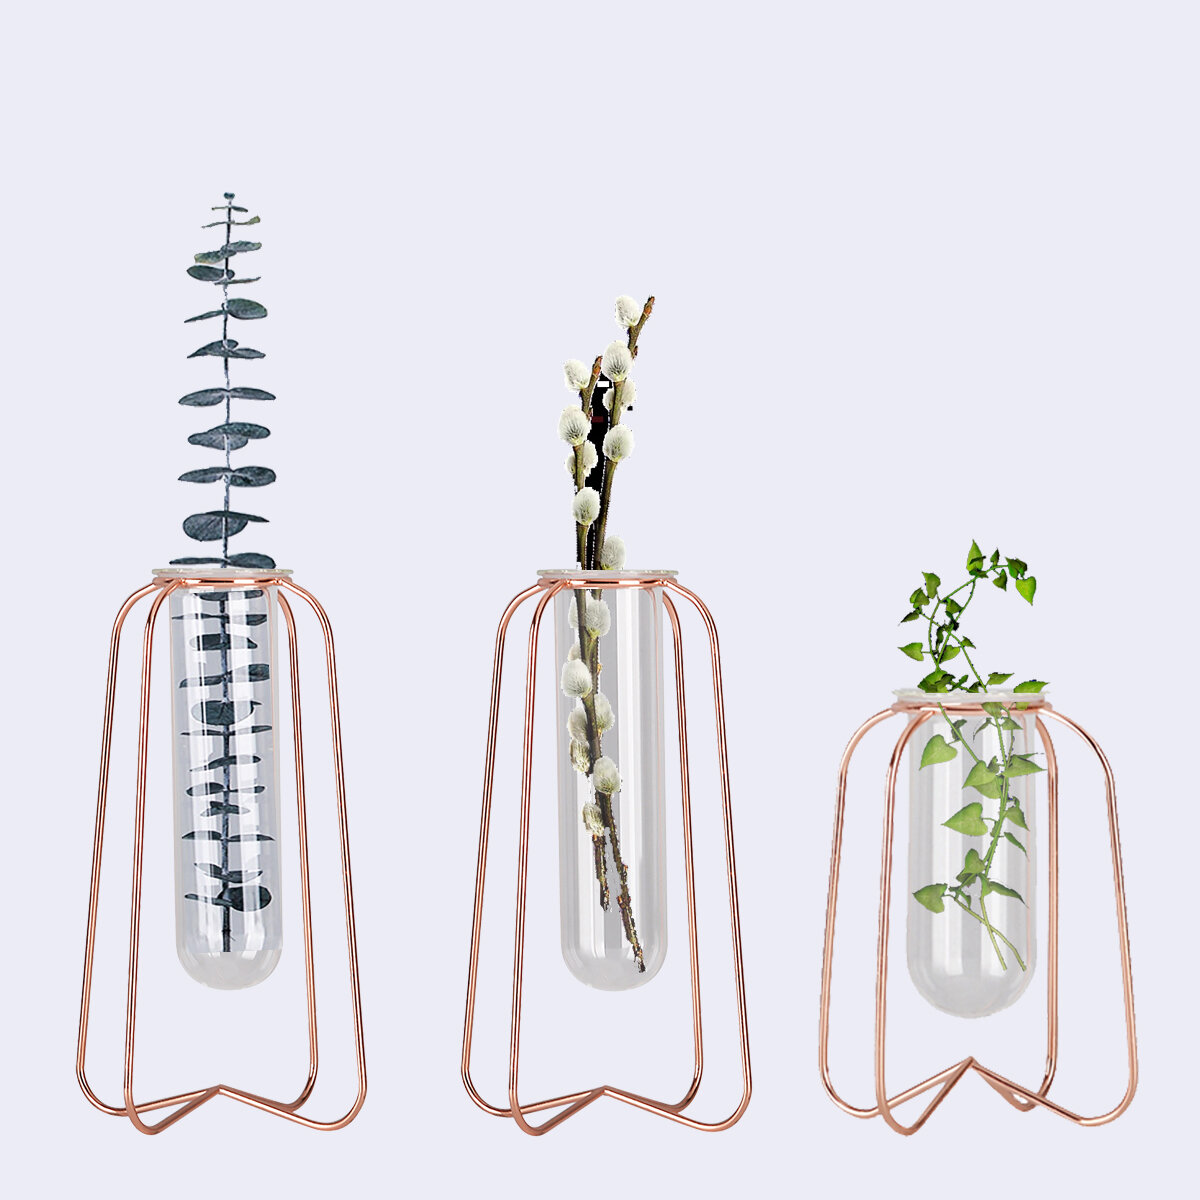 Glass Planter Test Tube Vase Pot + Retro Iron Stand Holder Plants Flowers Decoration